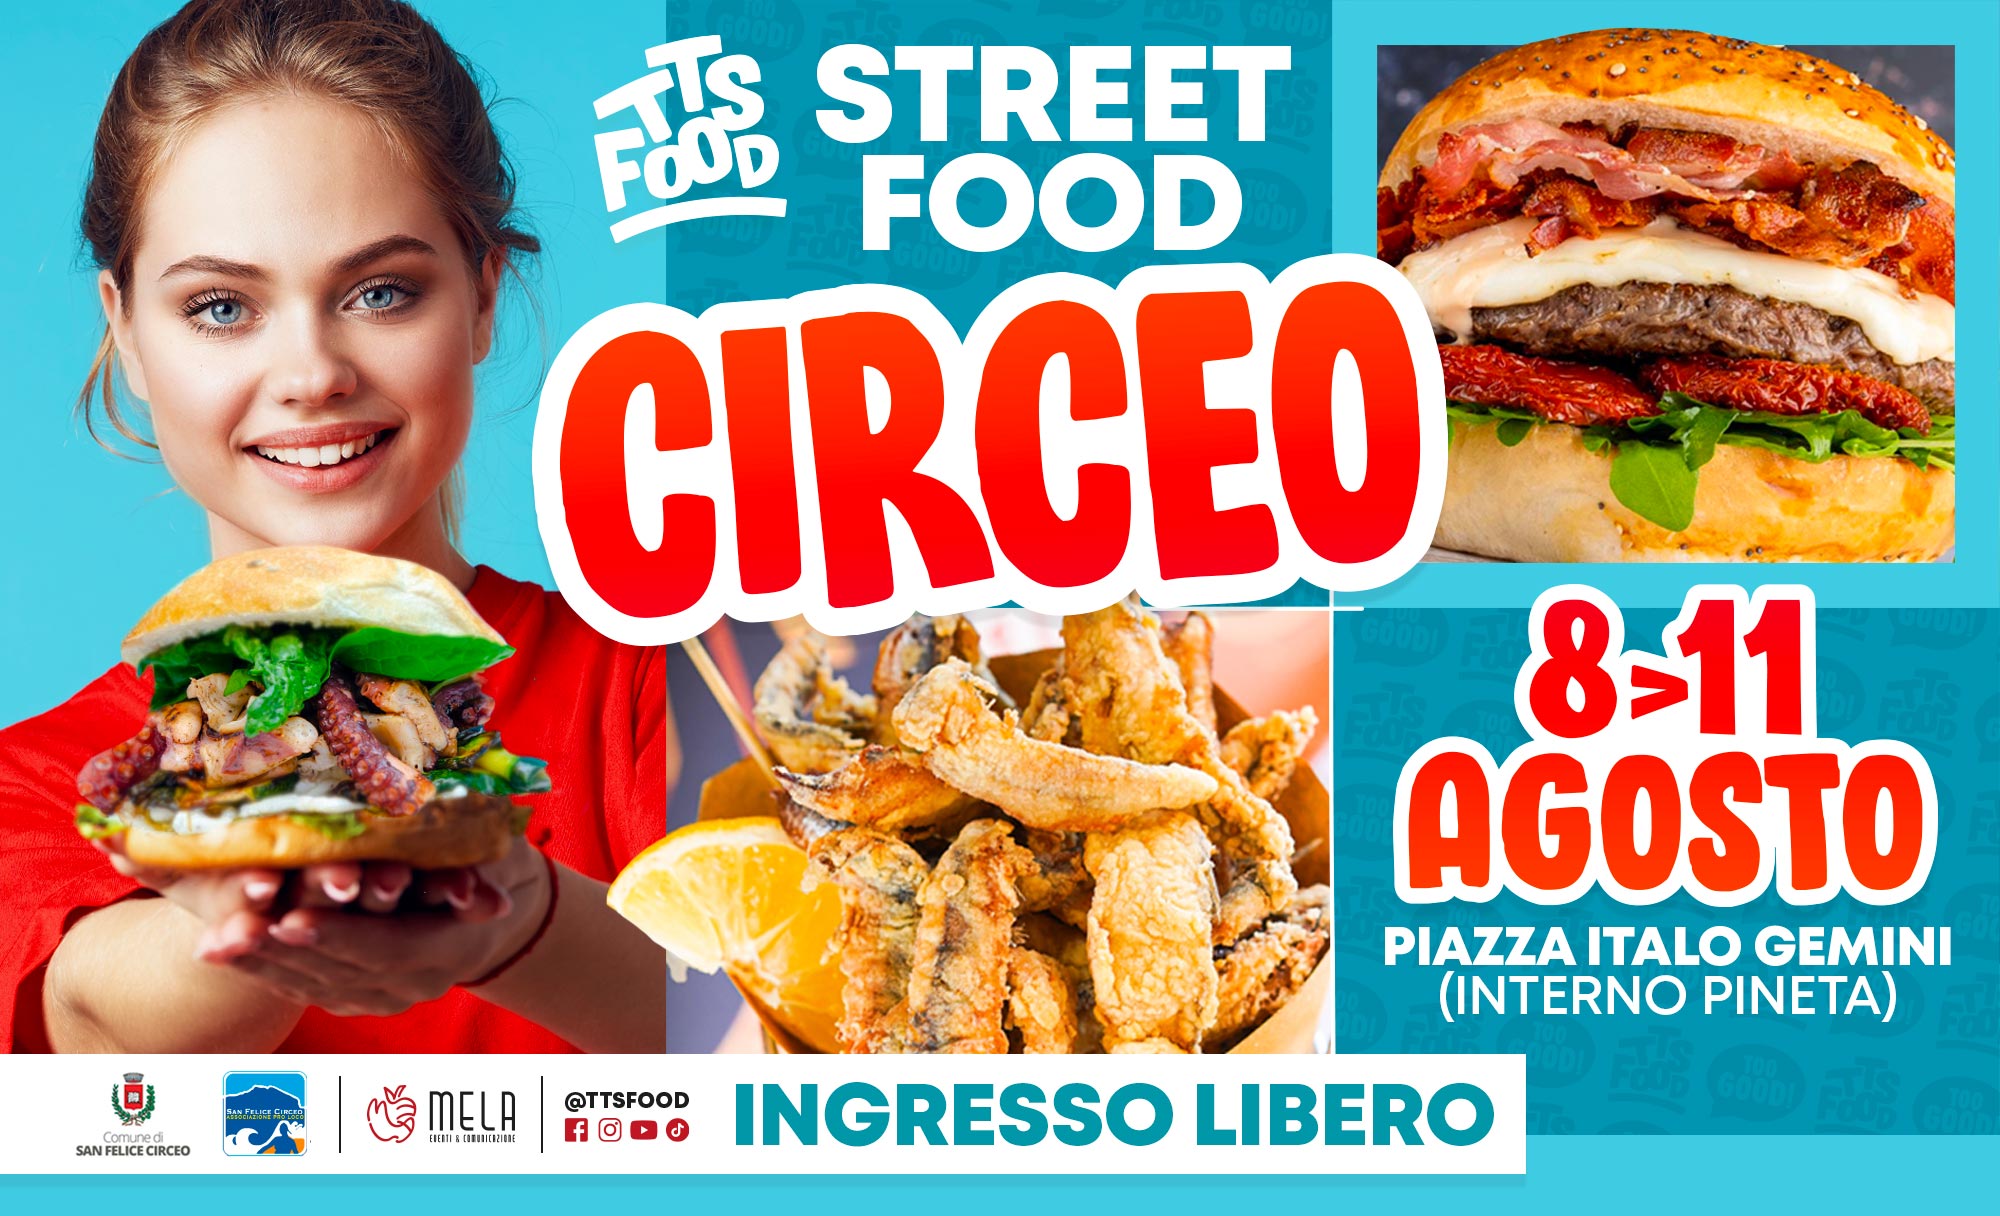 Circeo Street Food 08-11 Agosto